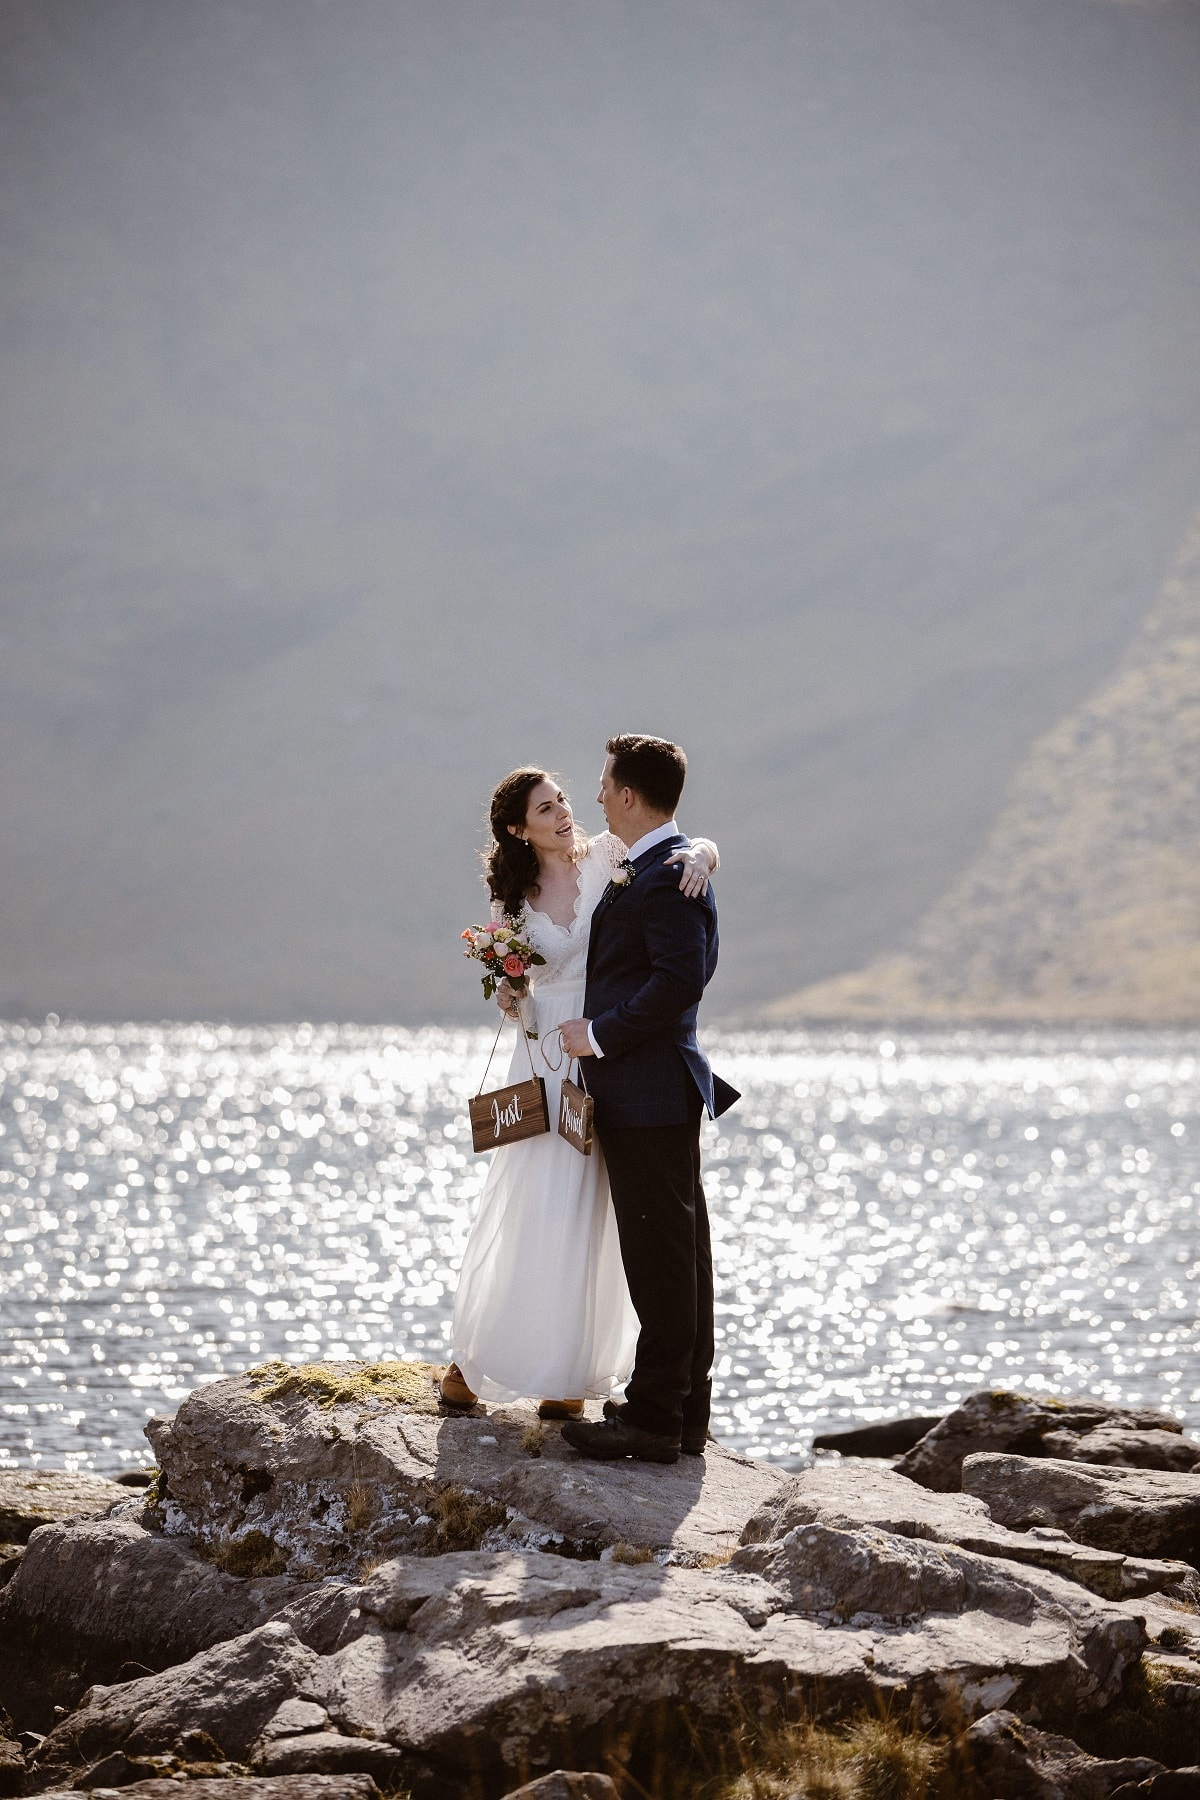 Love & Ventures Elopement & Adventure Wedding Photographer & Videographer